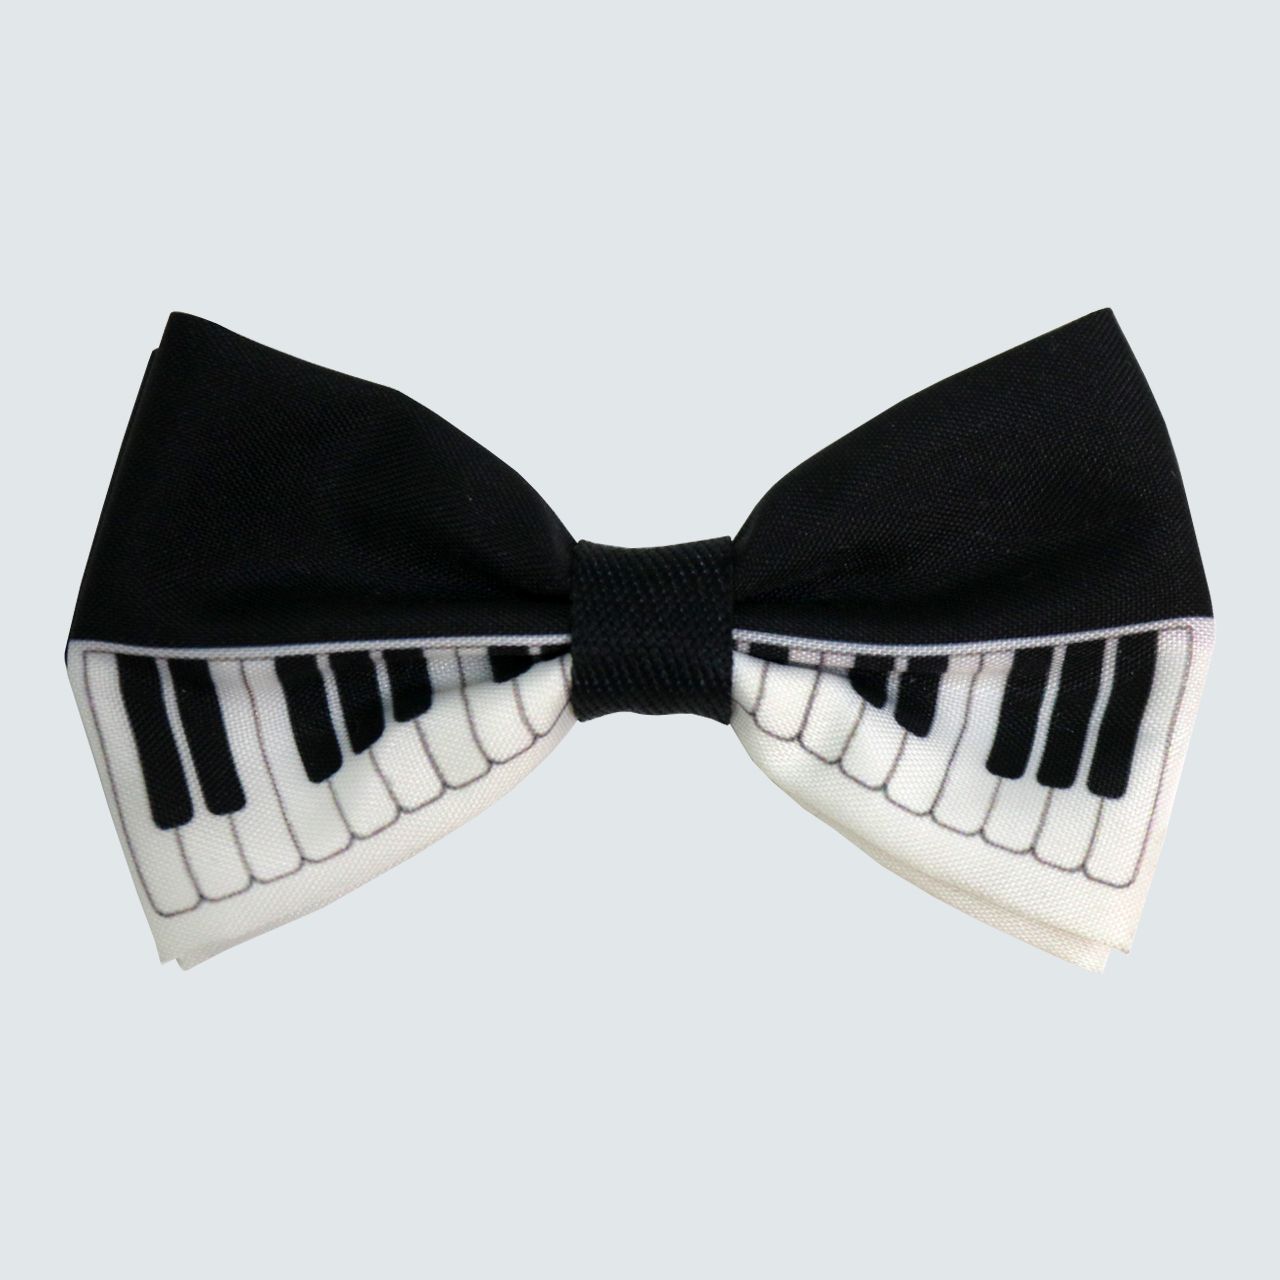 پاپیون مدل پیانو کد 115 -  - 1